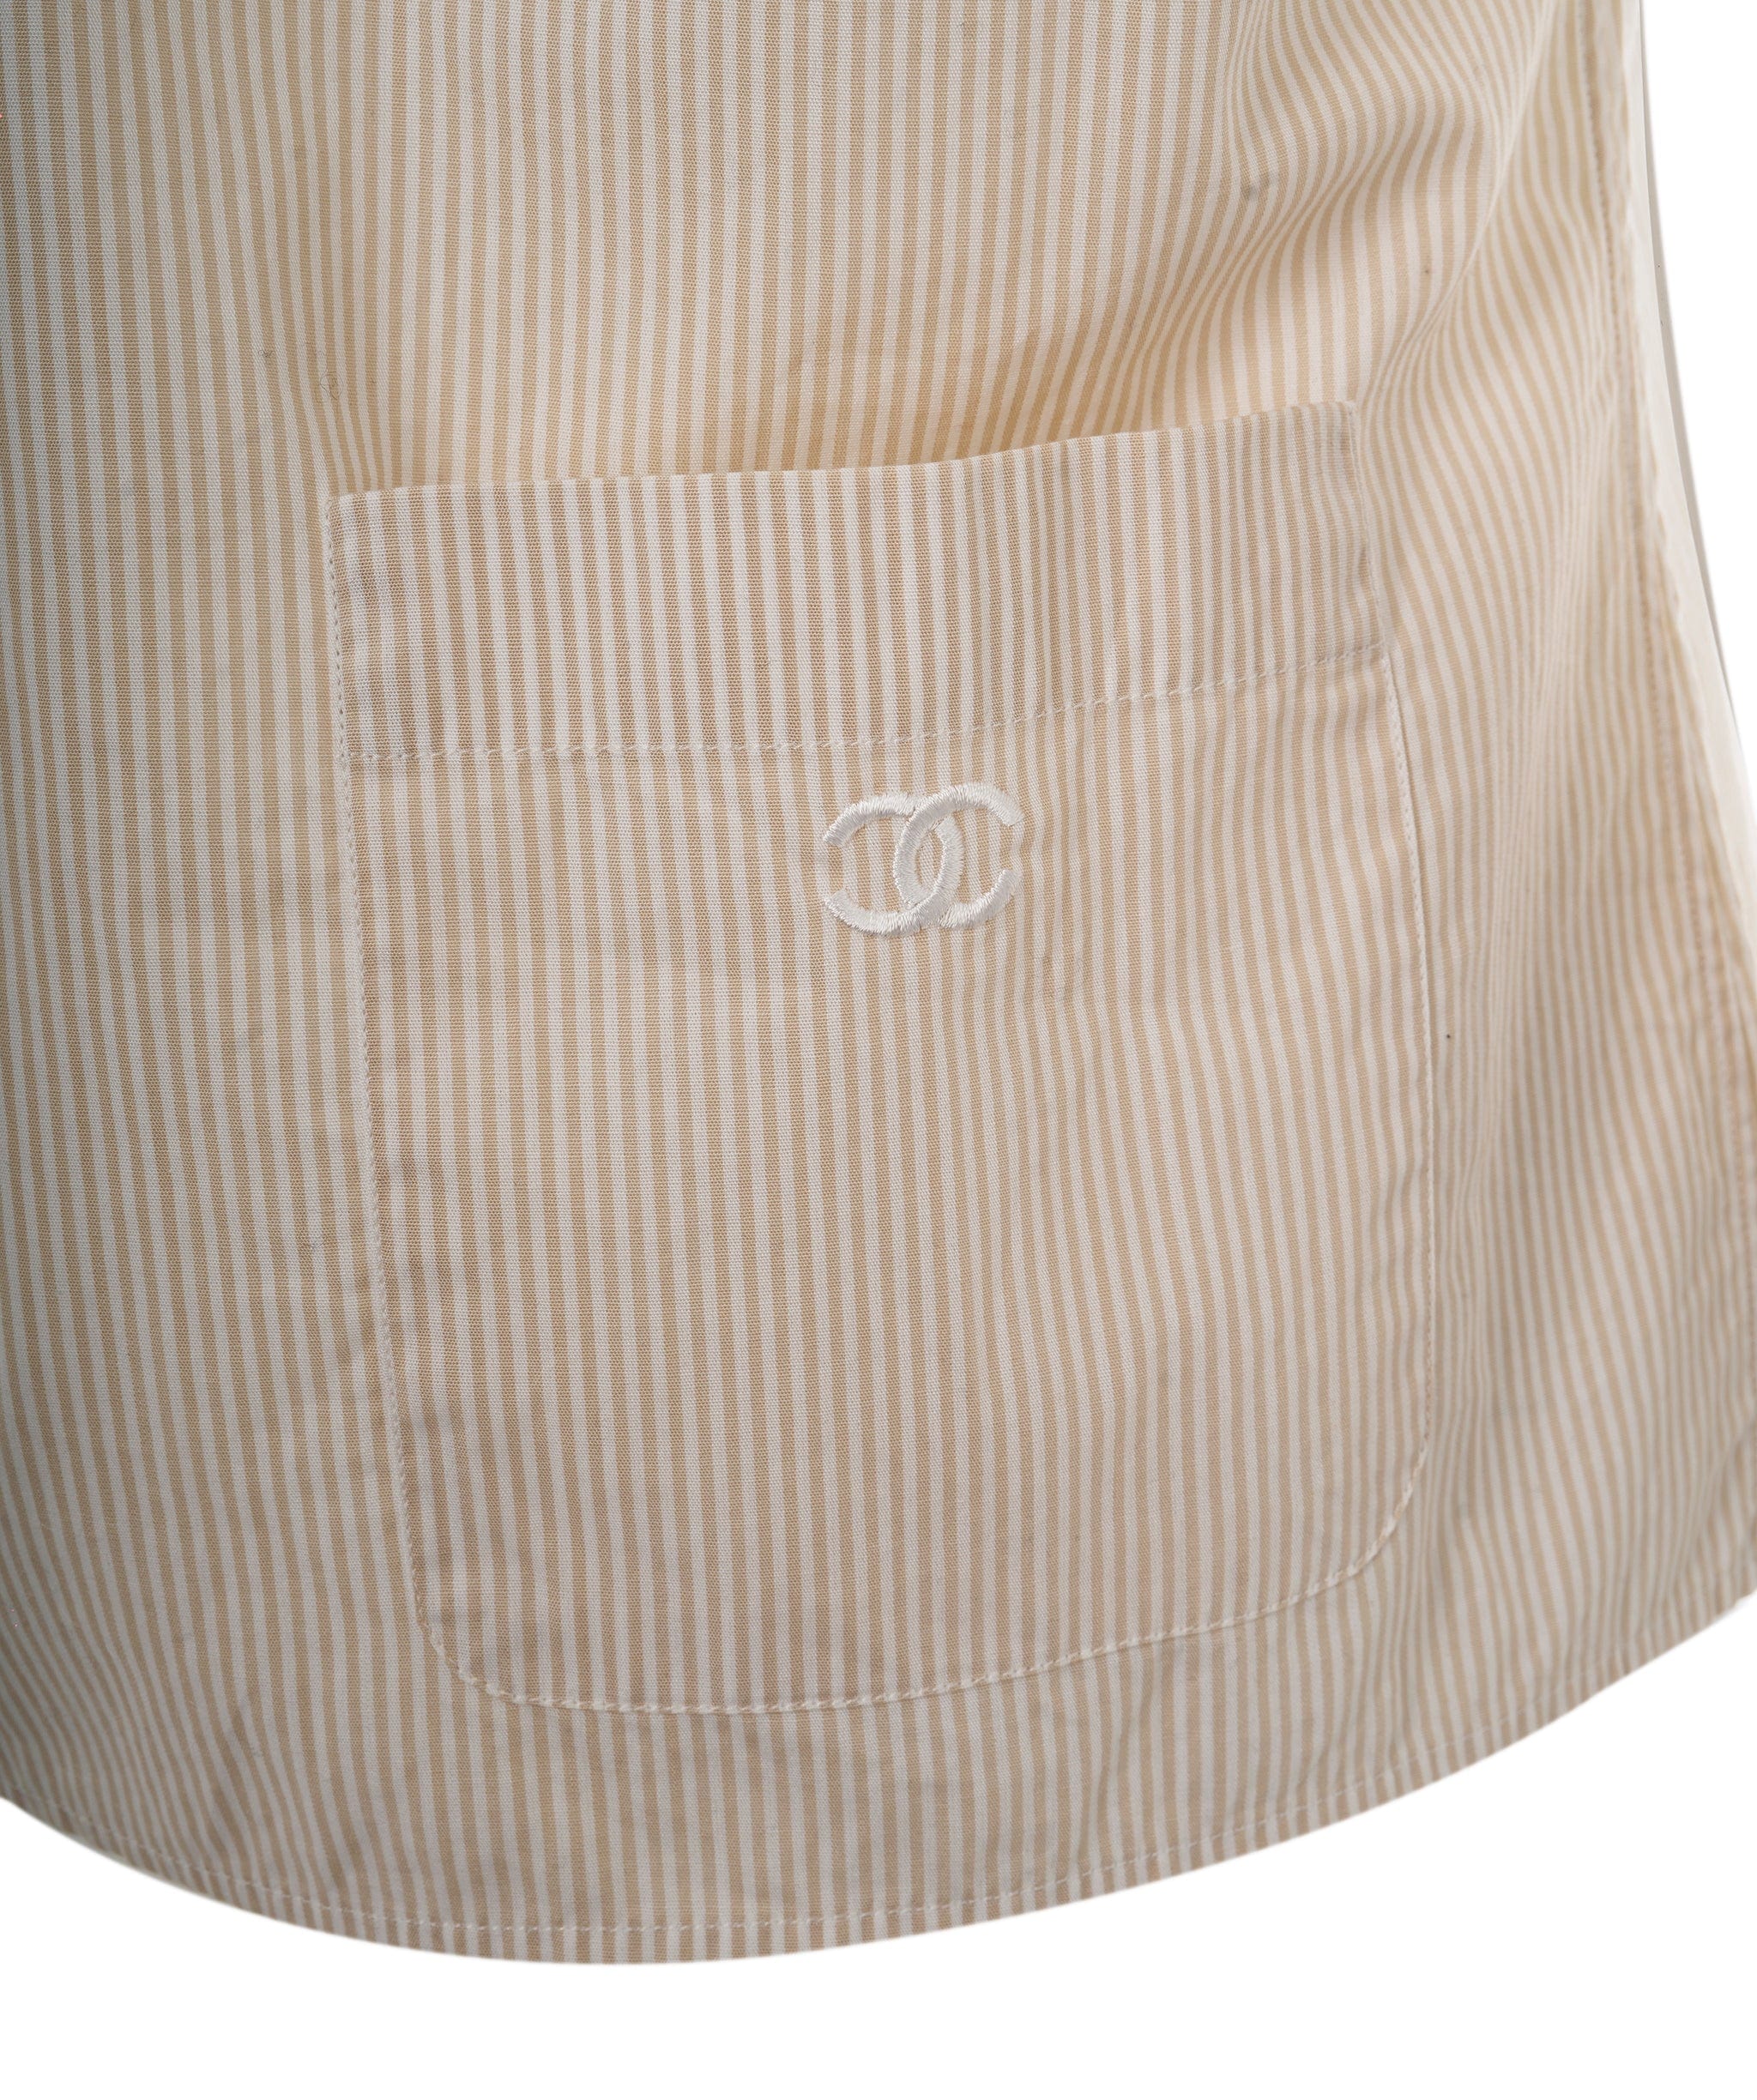 Chanel Chanel Beige Pinstripe CC shirt ALC1176